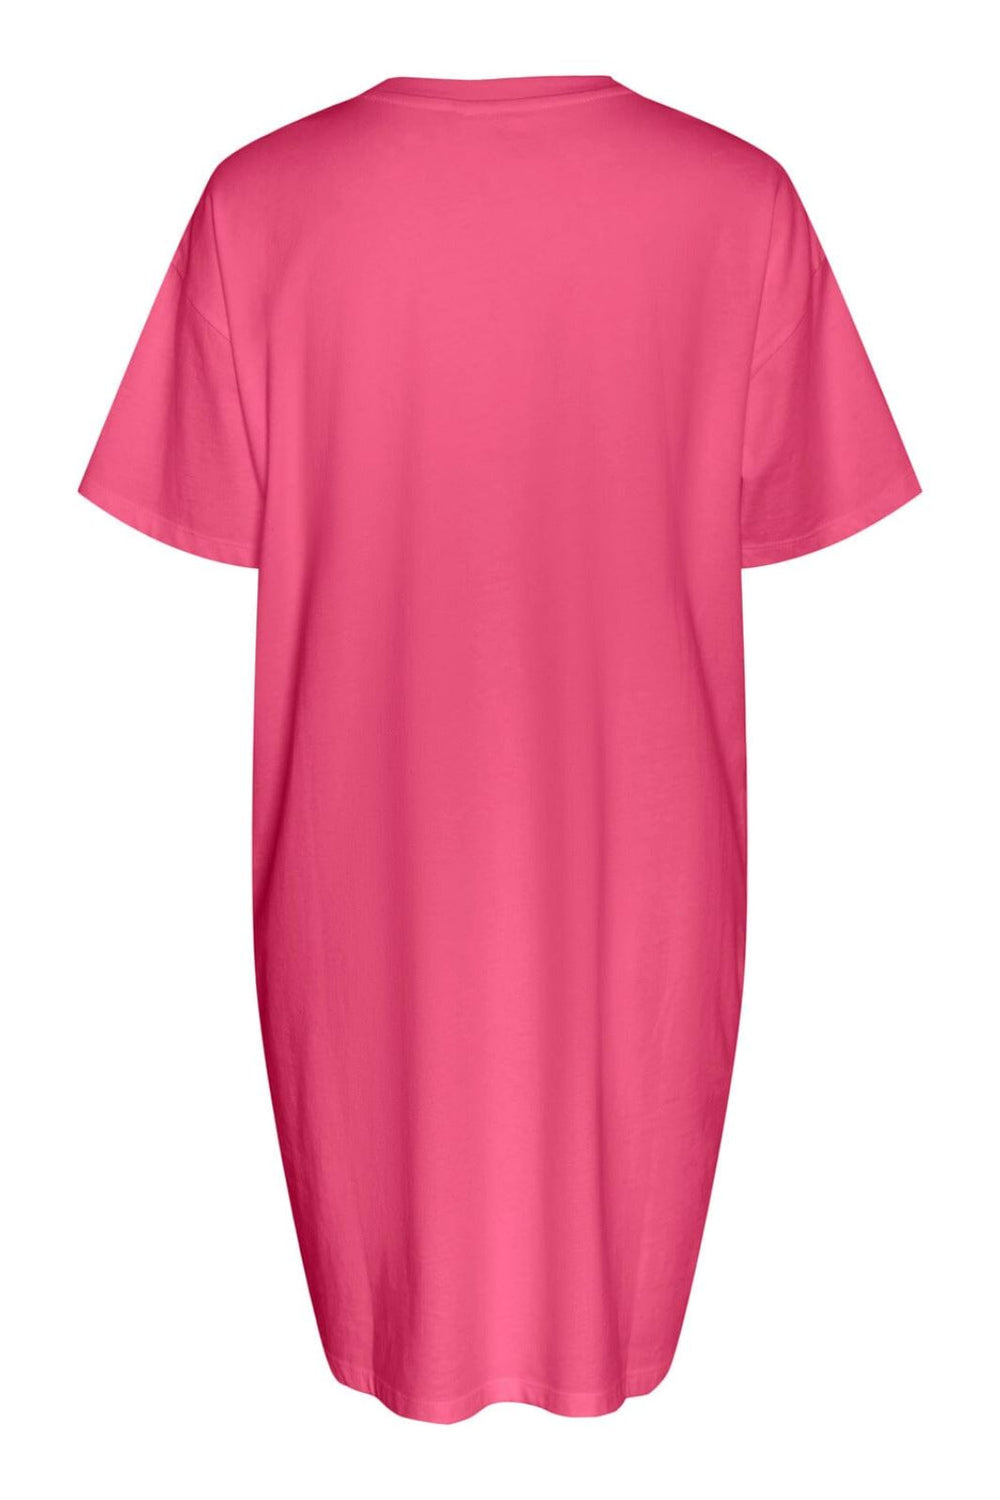 Pieces - Pcria Ss Dress - 4476705 Hot Pink Kjoler 